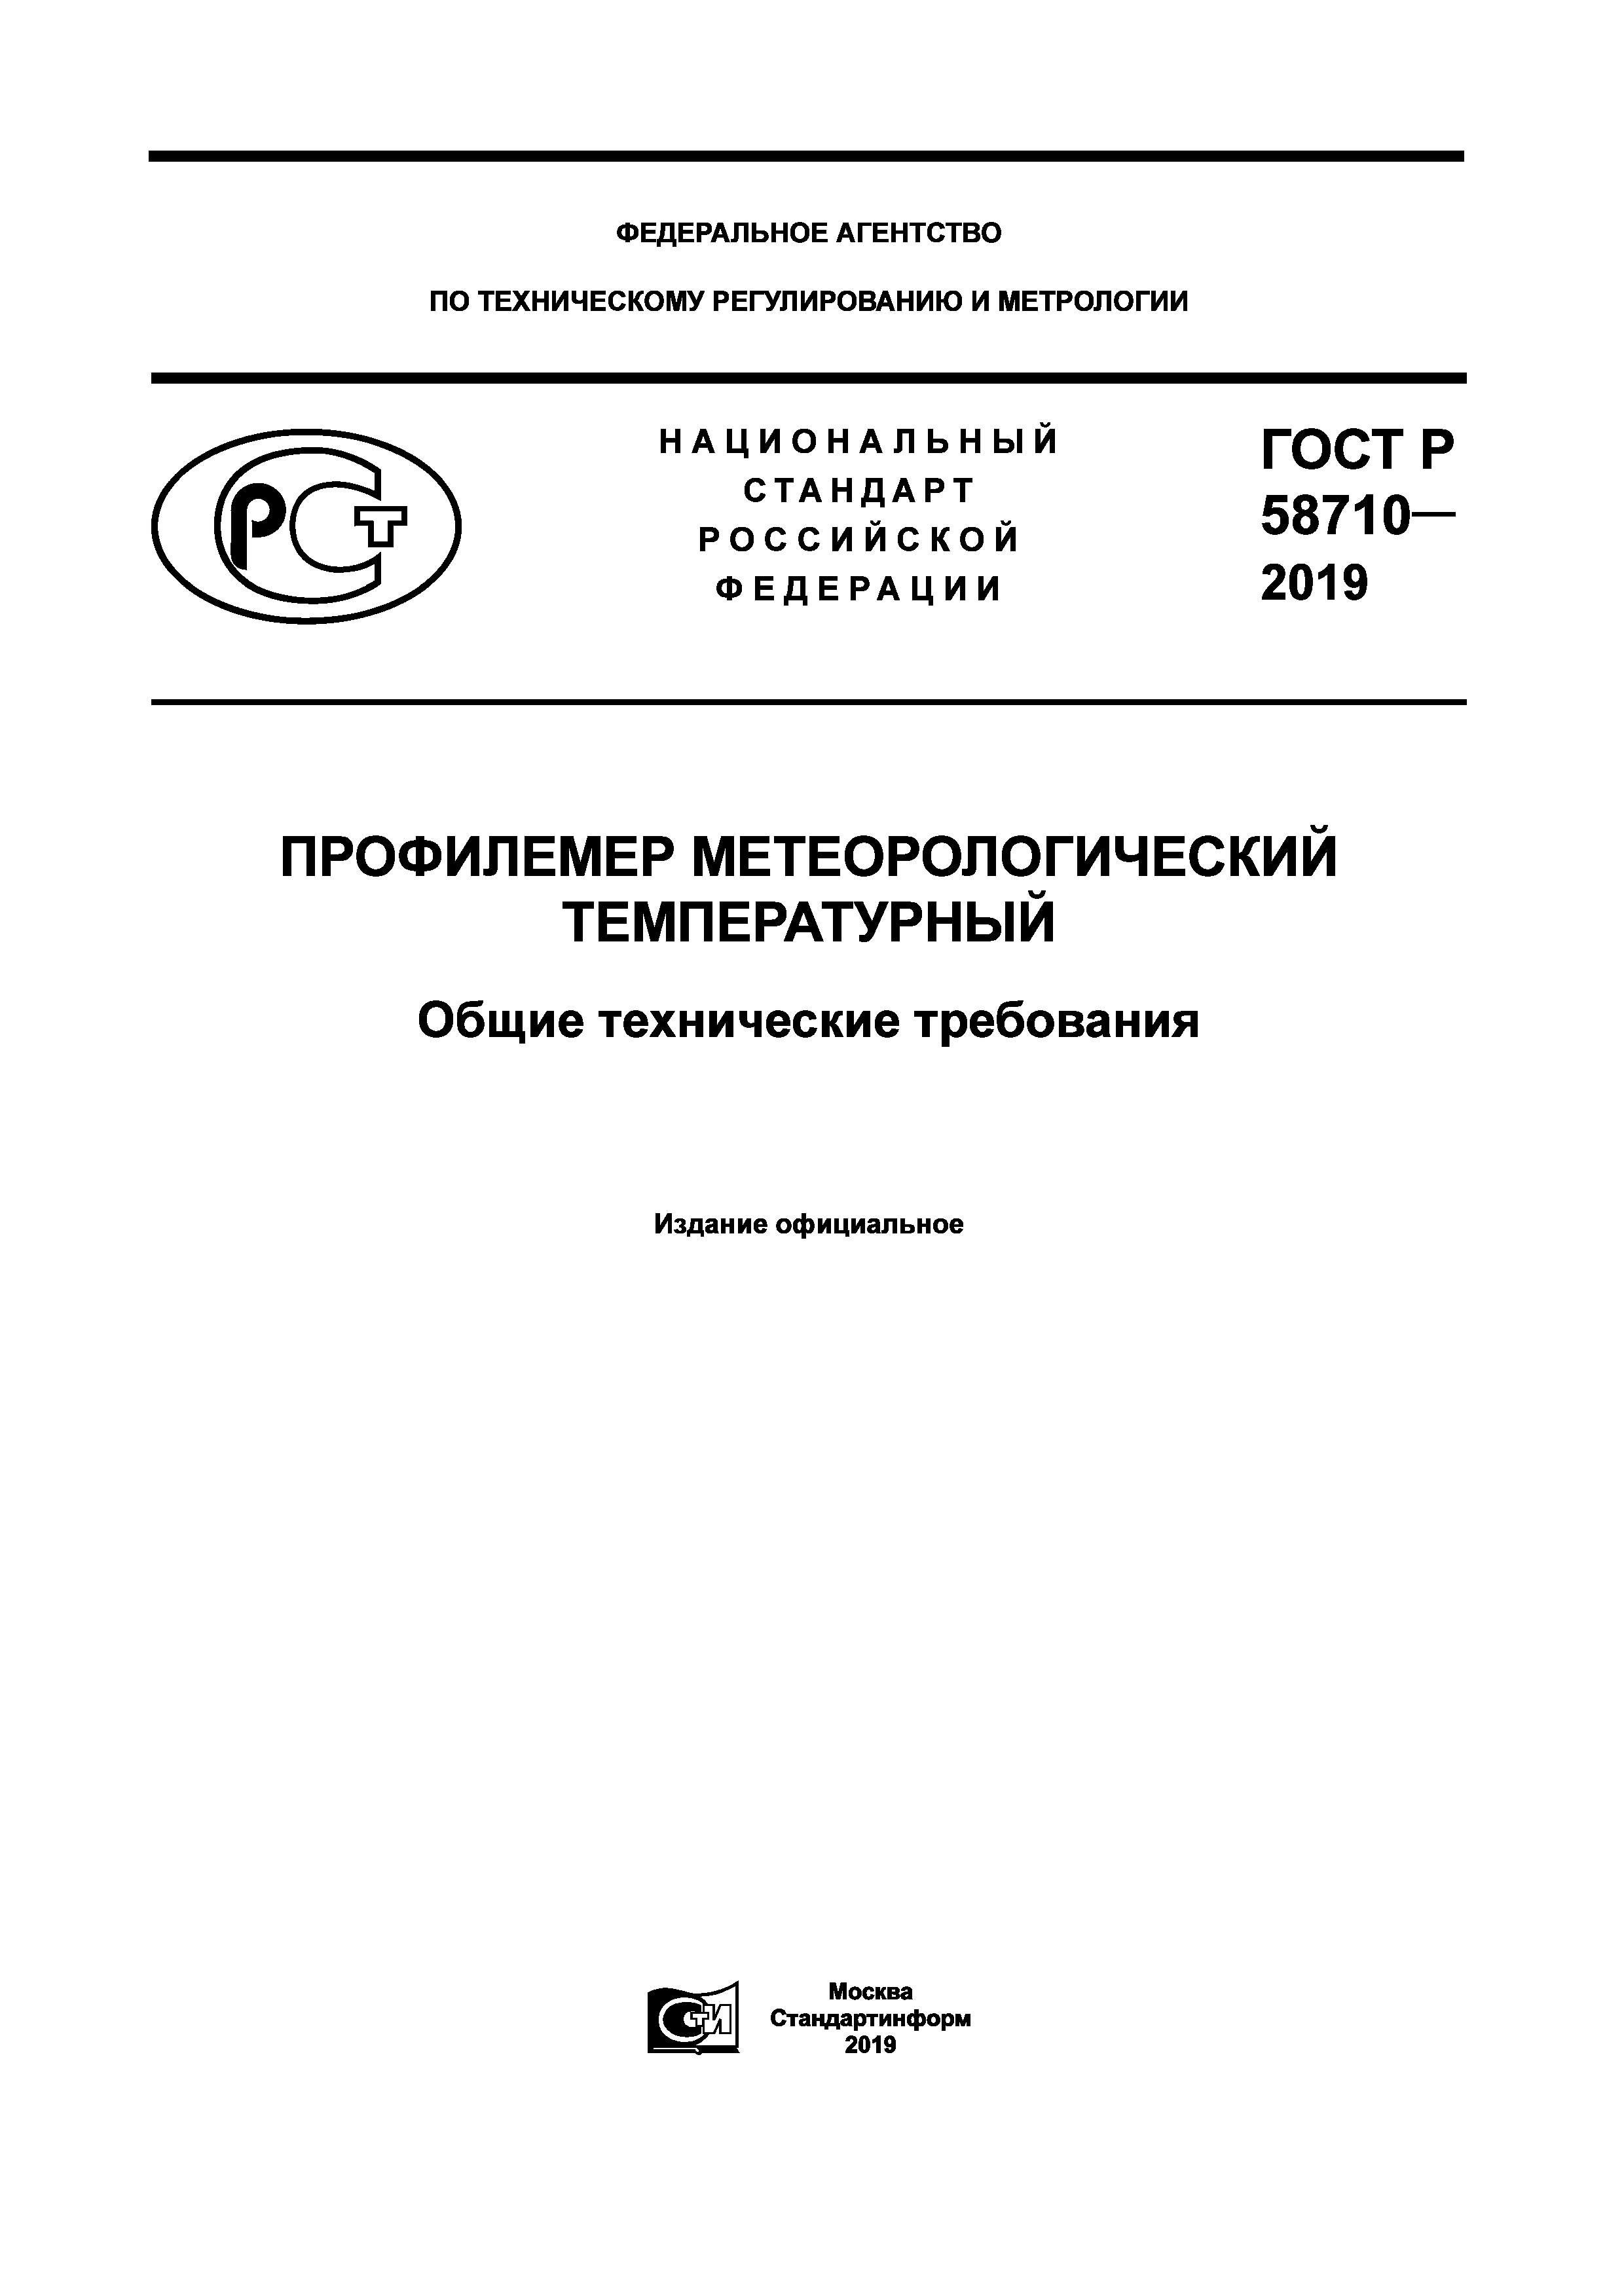 ГОСТ Р 58710-2019